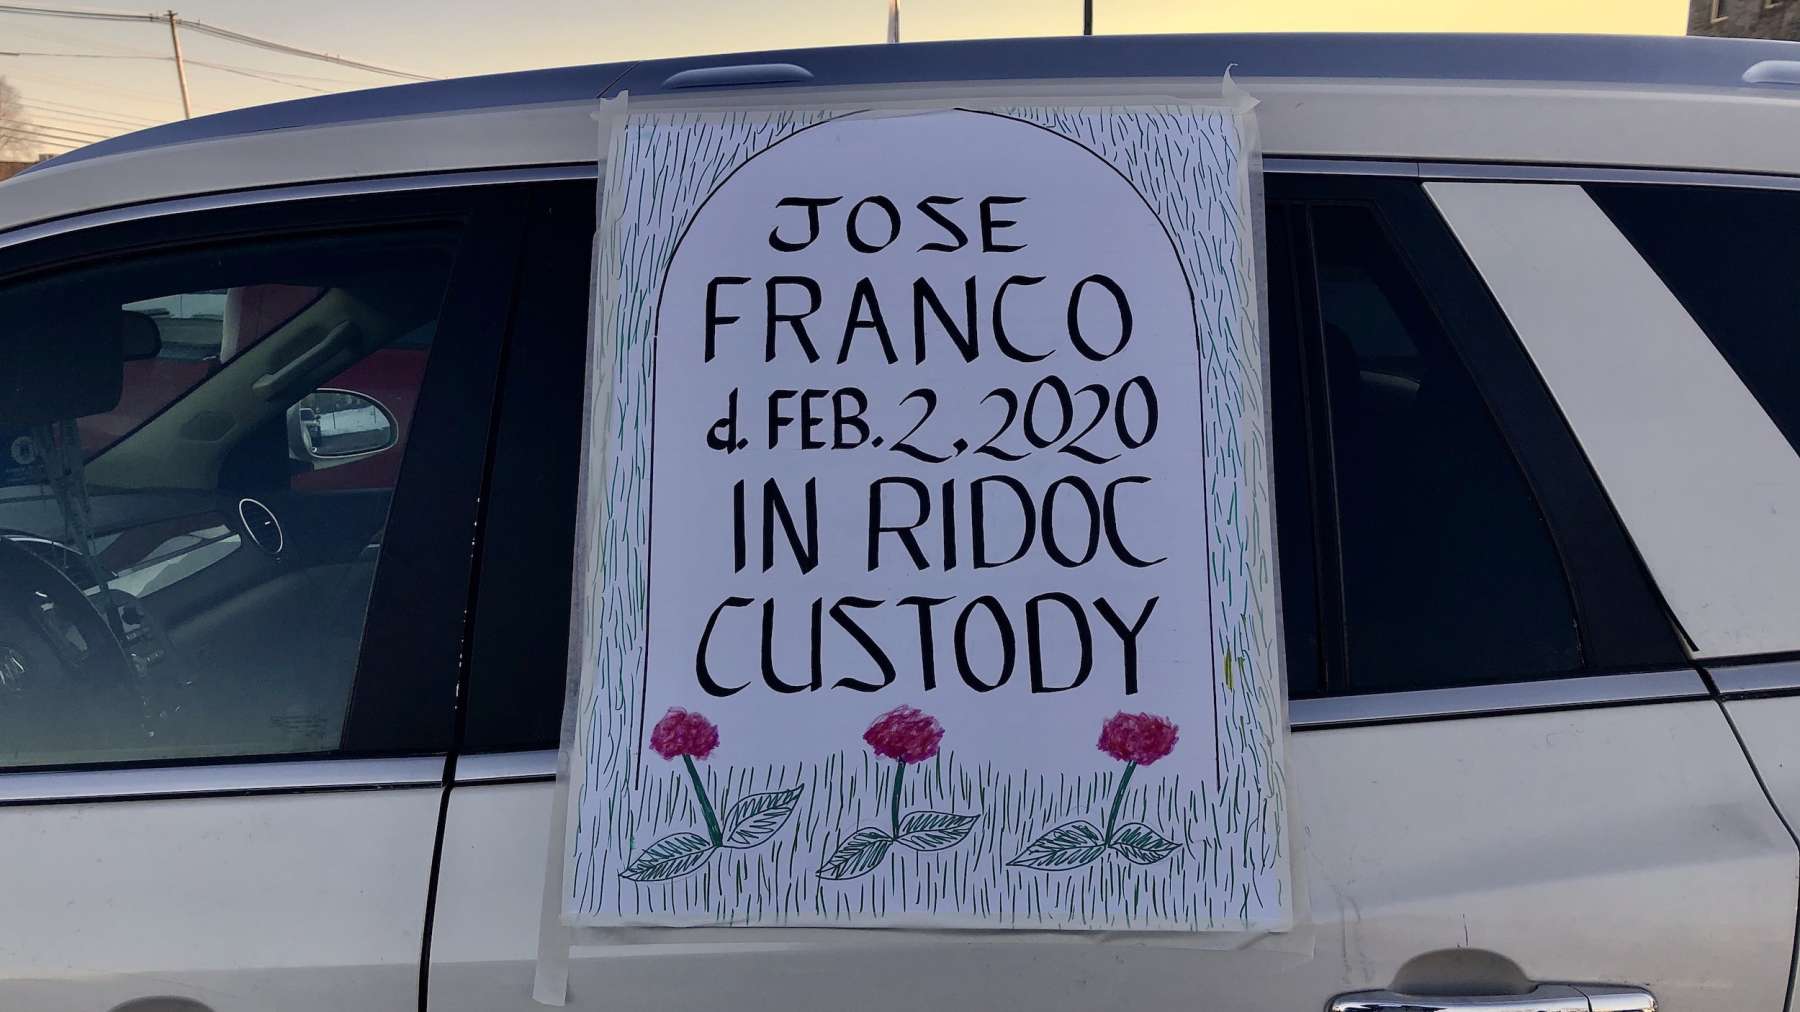 Rhode Island News: A car rally in memory of Jose Franco, who died in RIDOC custody